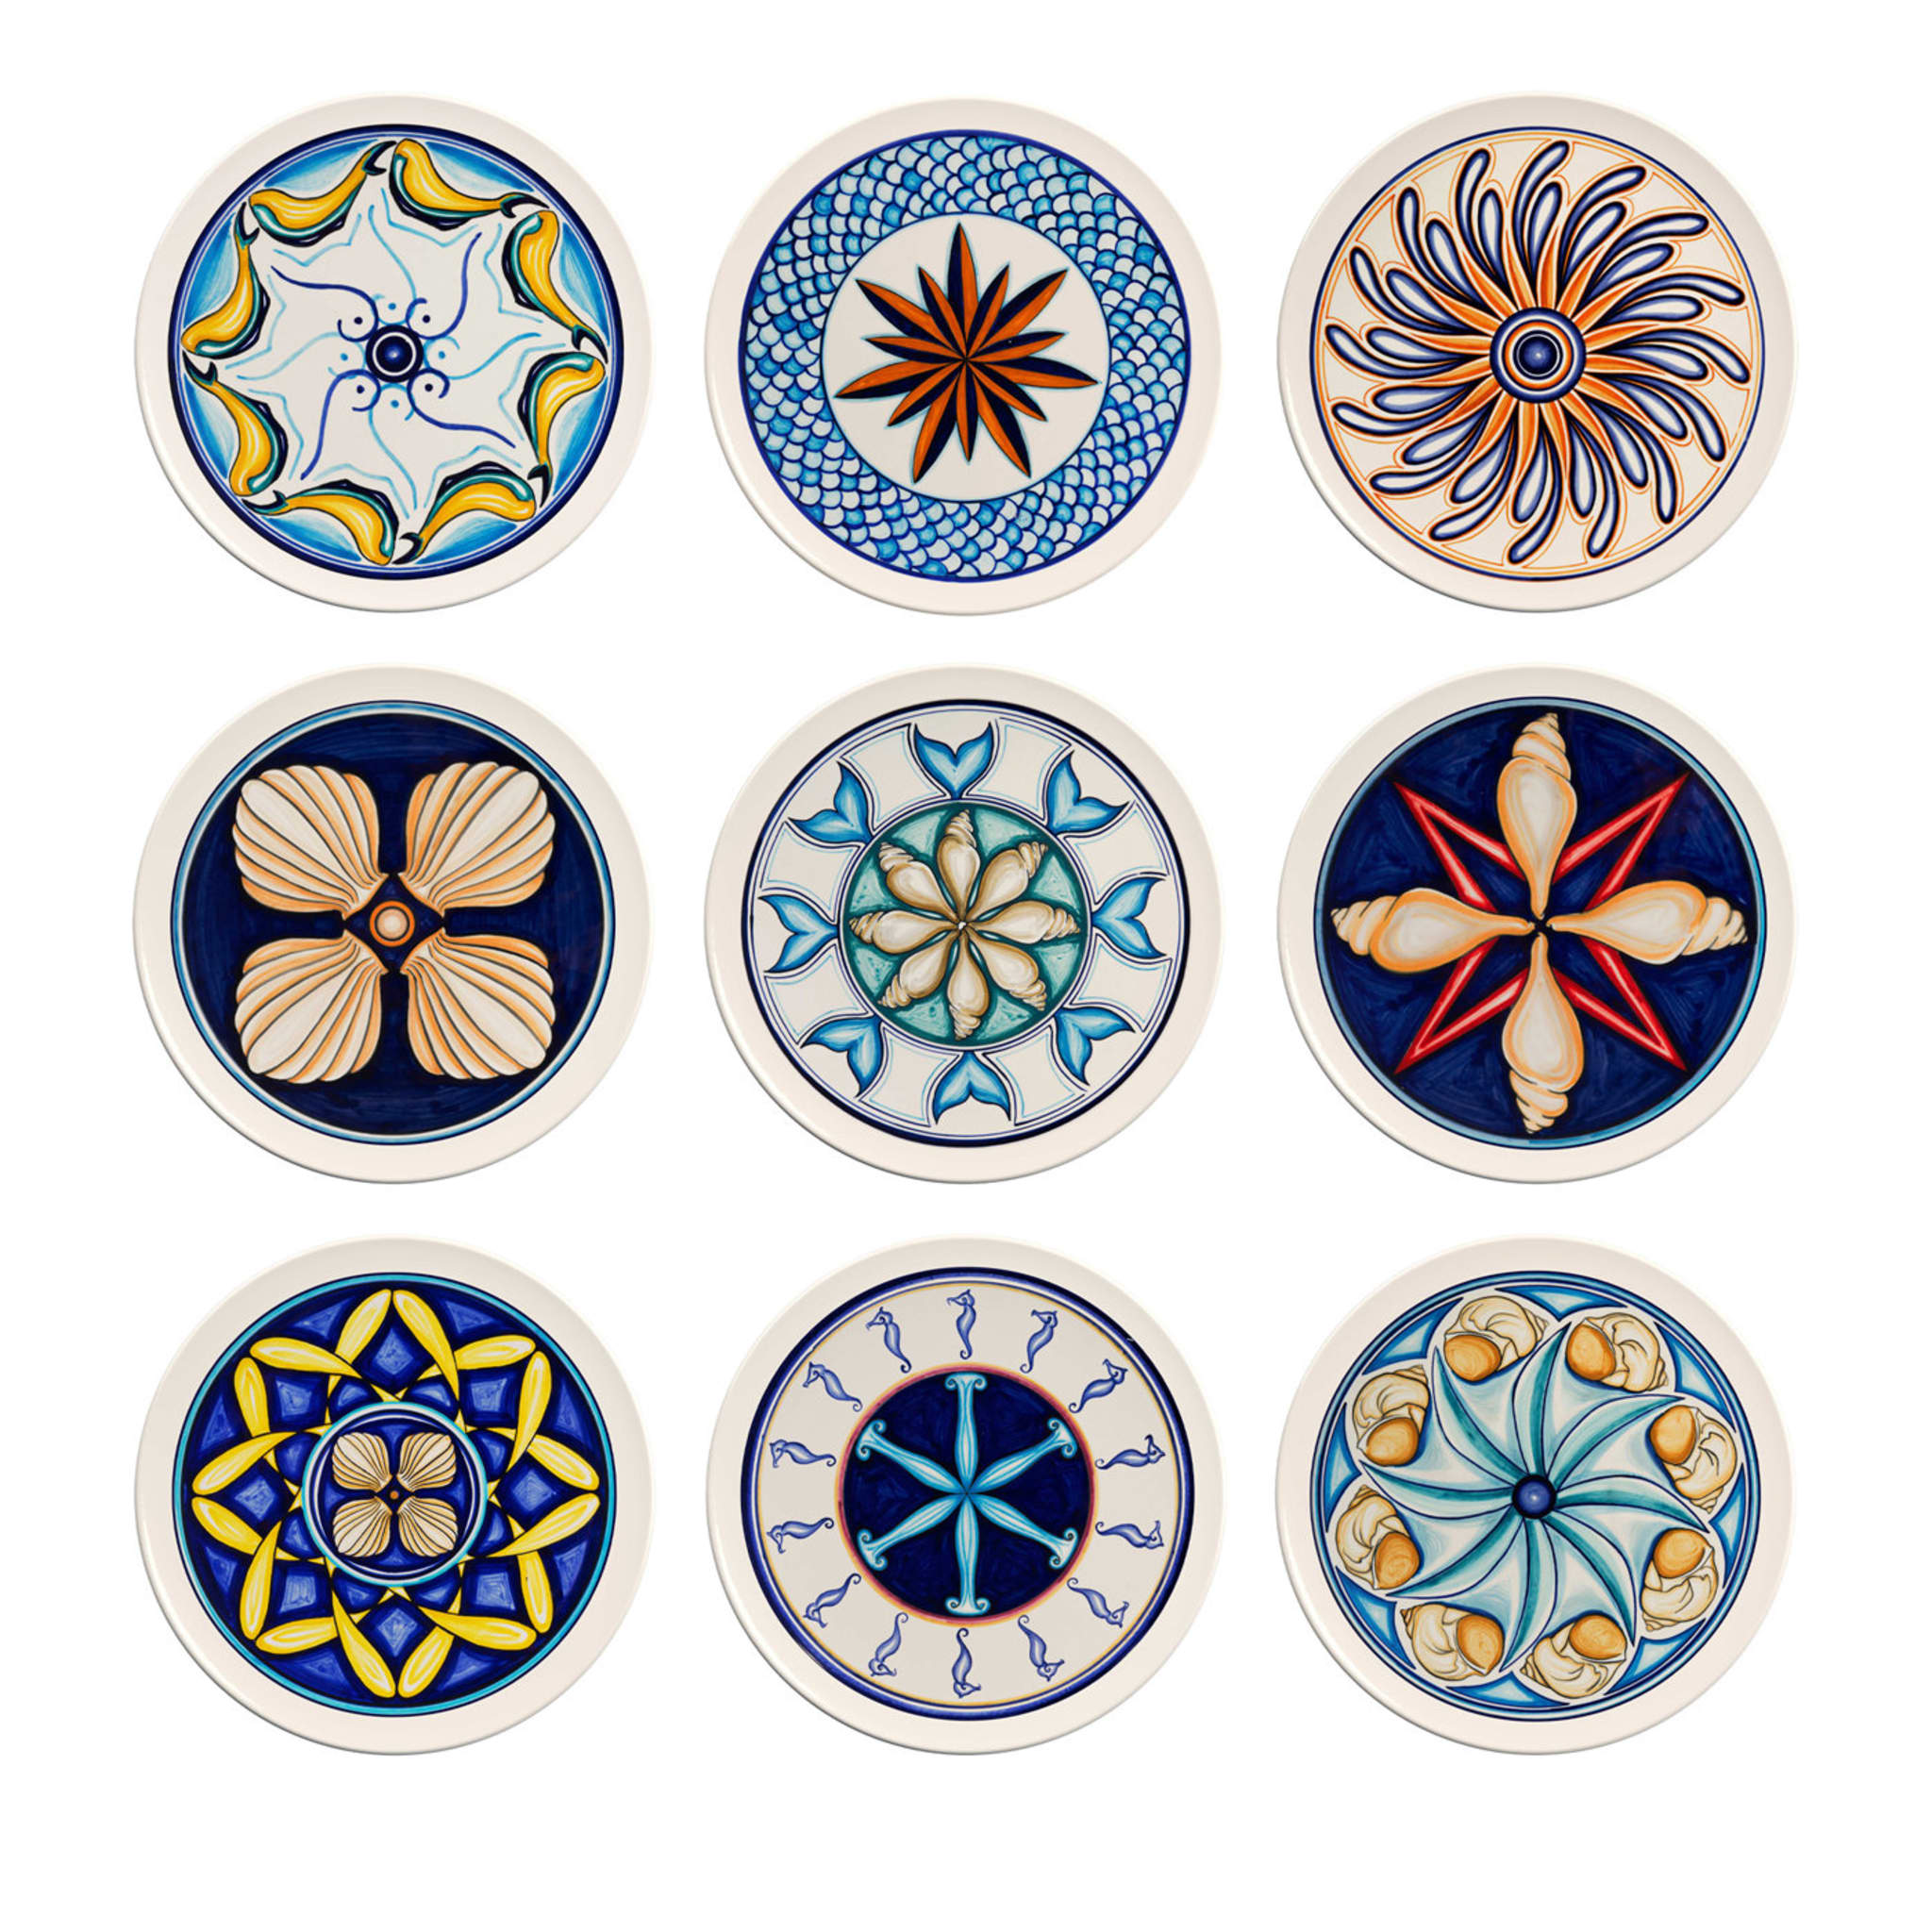 Colapesce Set of 9 Decorative Plates #2 - Main view